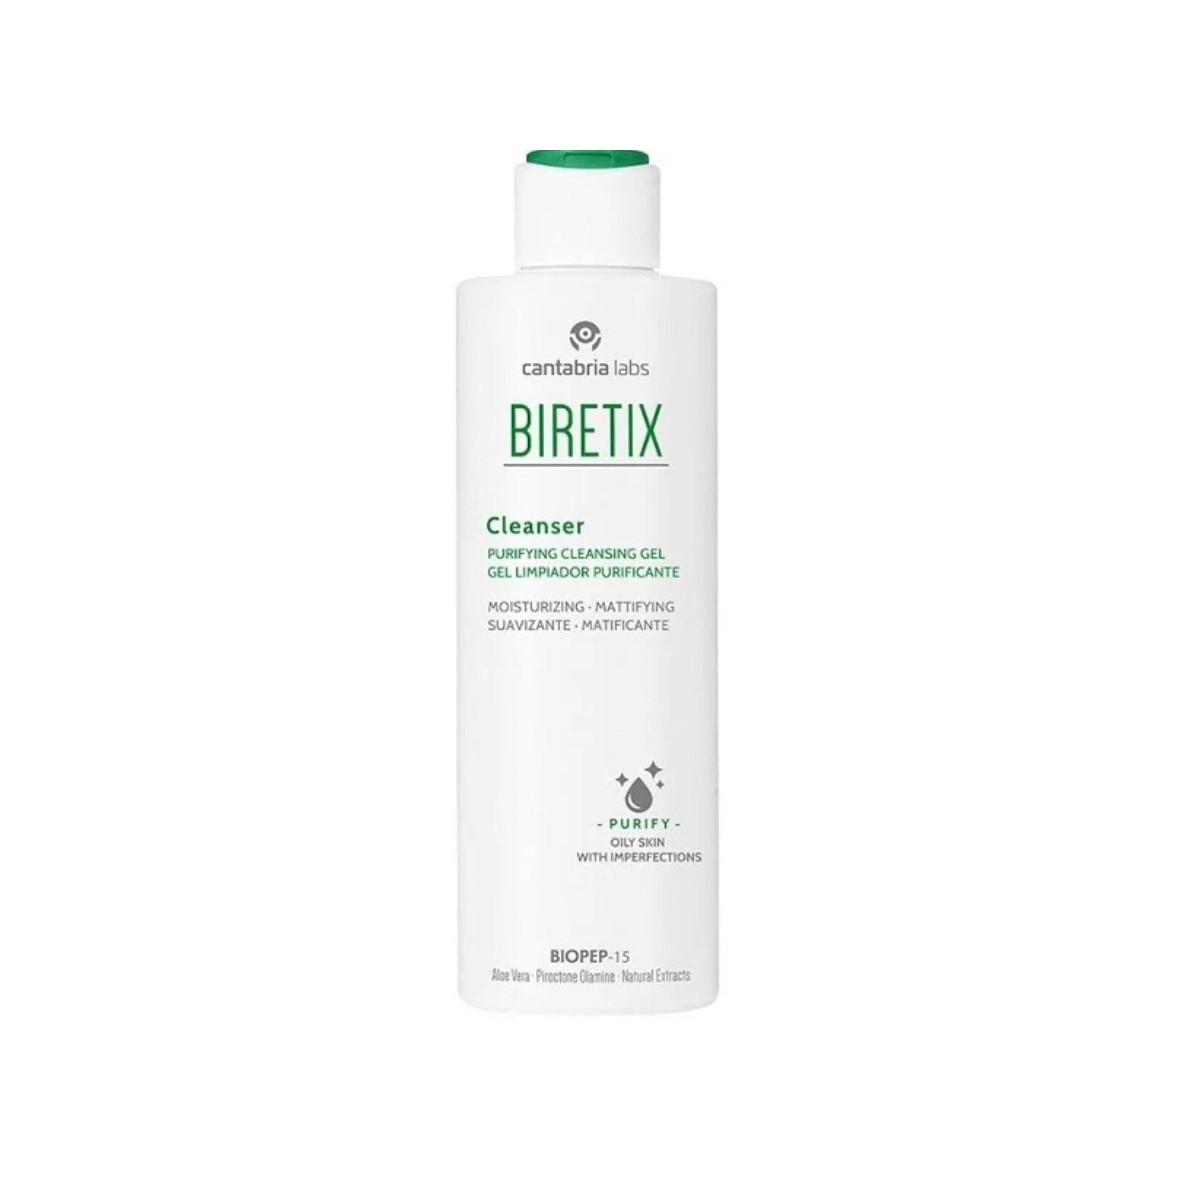 biretix-cleanser-gel-limpiador-purificante-200-ml